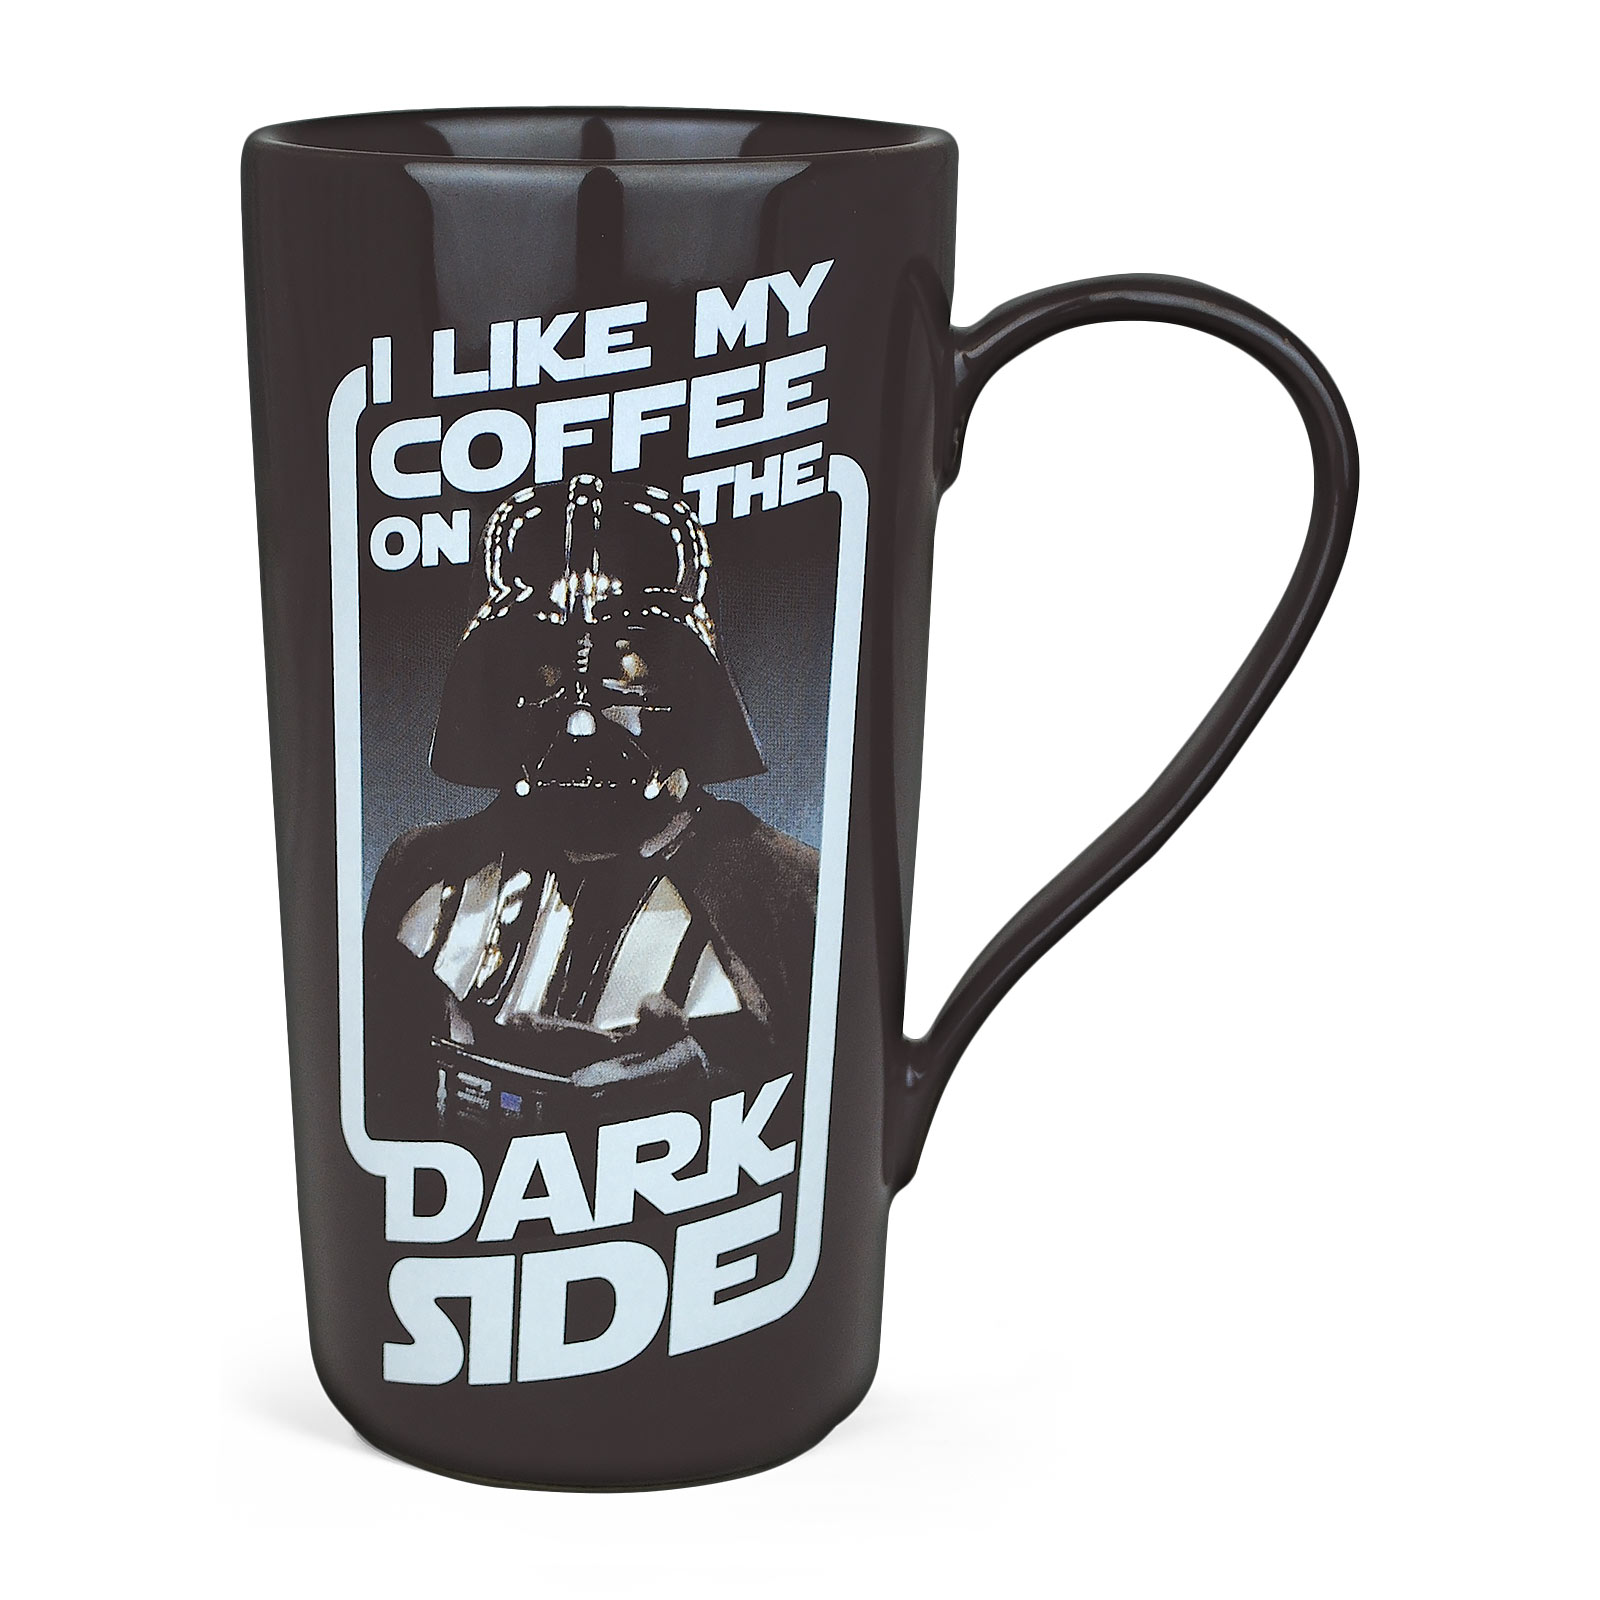 Star Wars - Darth Vader Dark Side XXL Mug